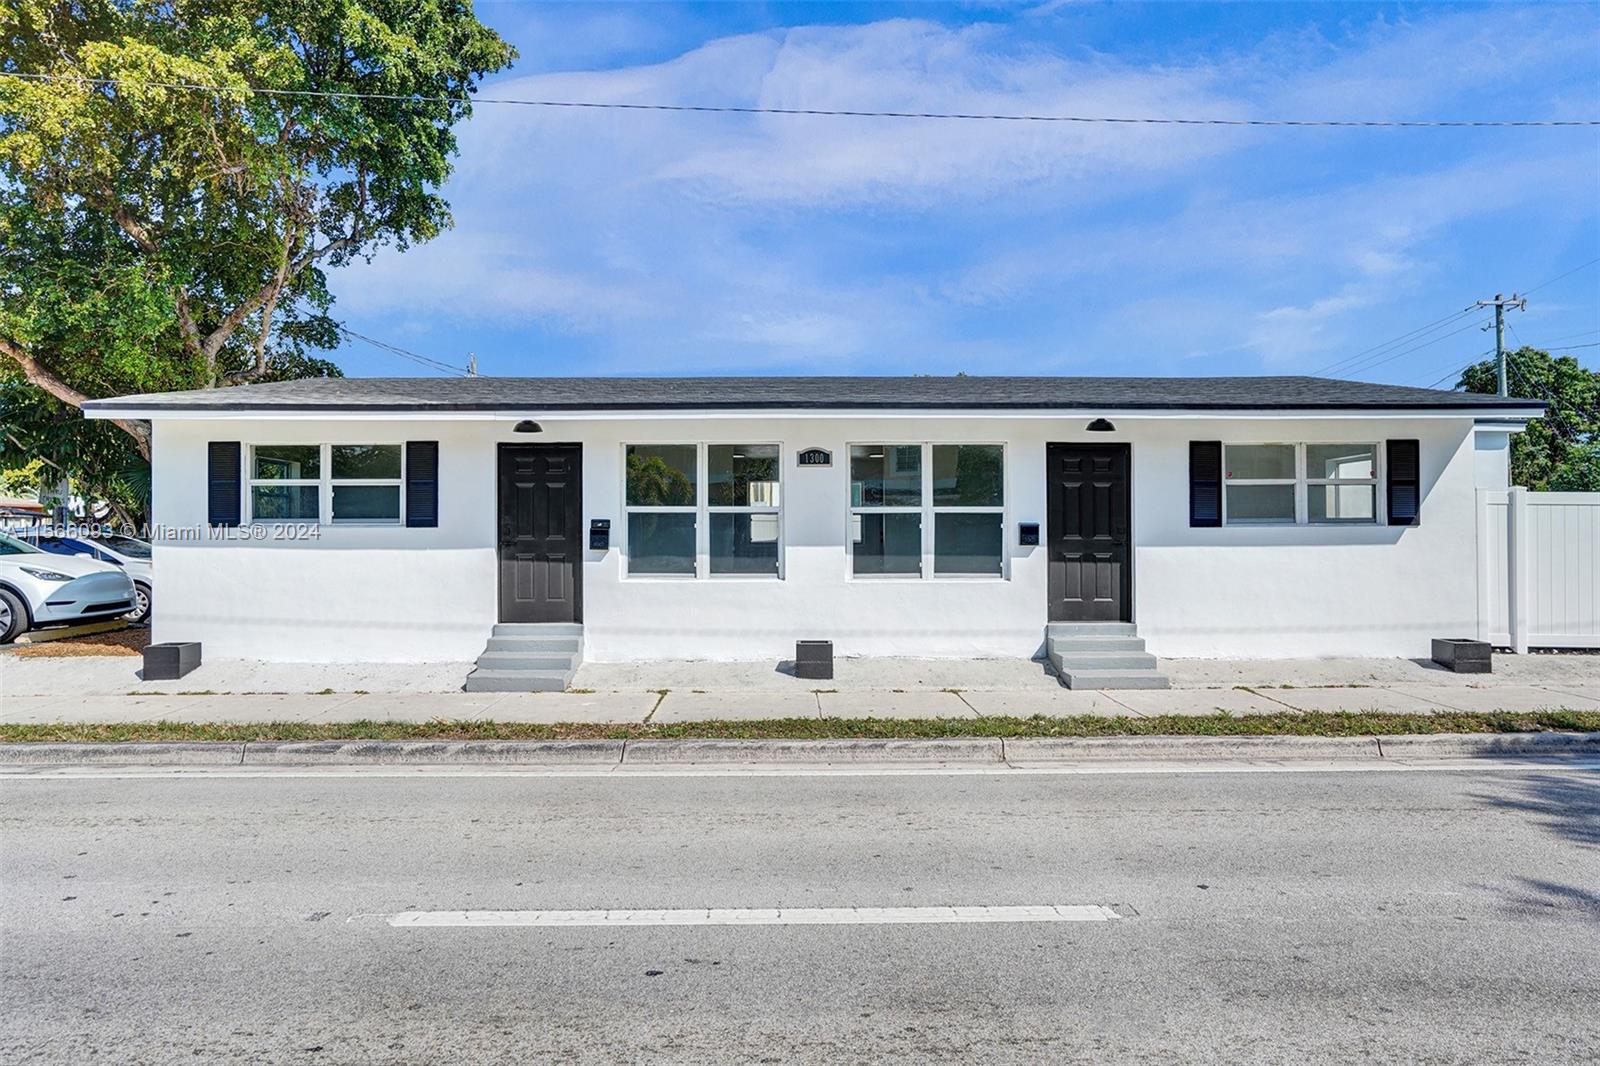 Rental Property at 1300 Ne 2nd Ave, Fort Lauderdale, Broward County, Florida -  - $699,000 MO.